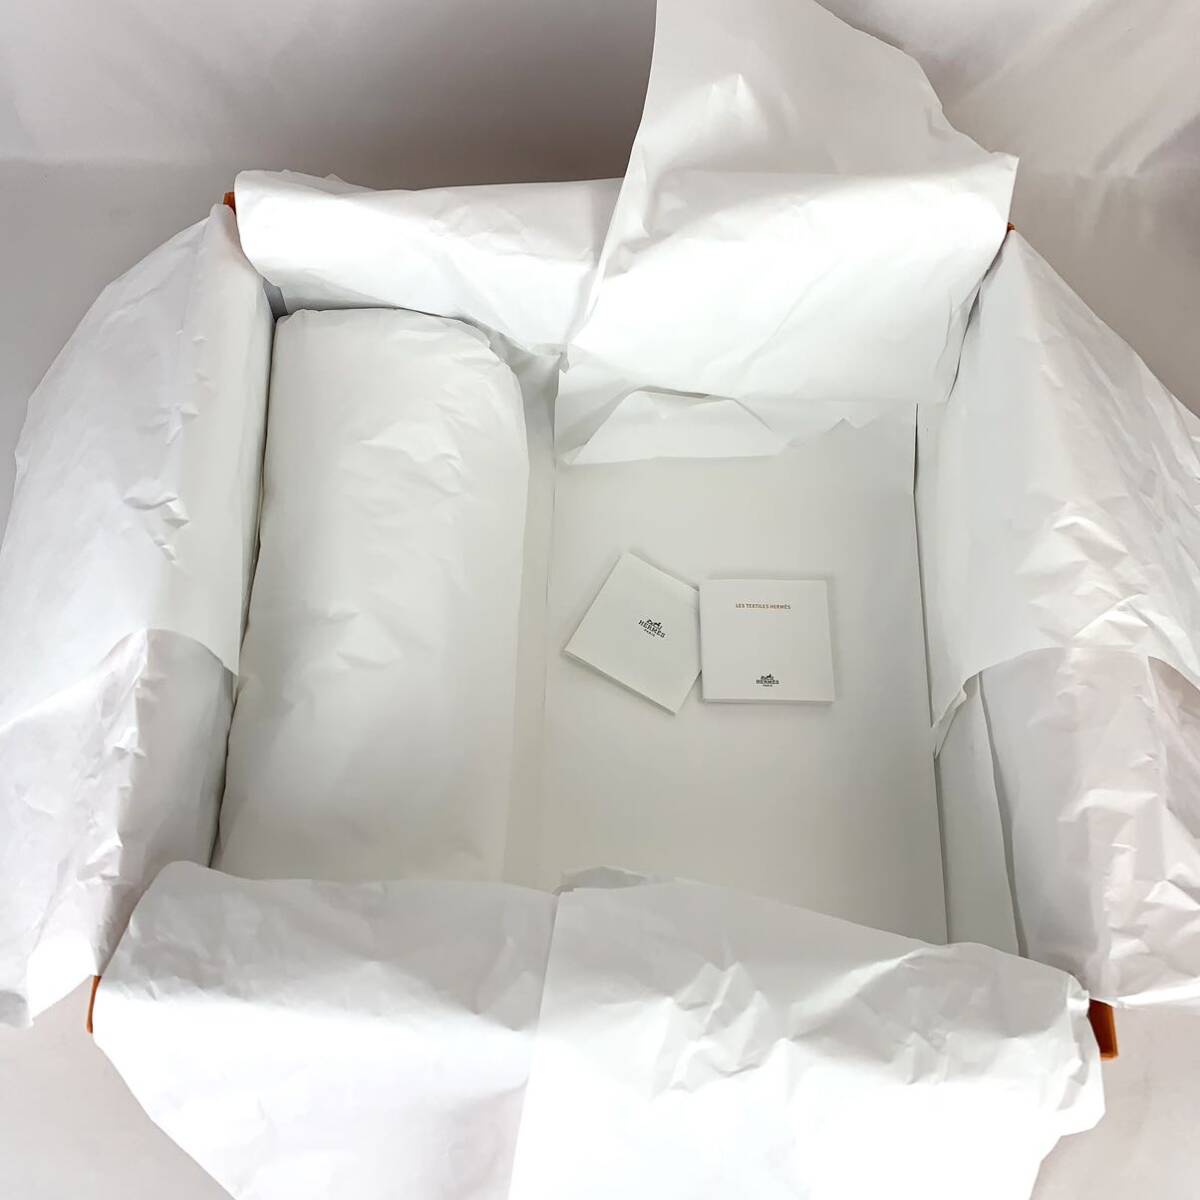 HERMES エルメス 空箱 保存袋 BOX 1312 ボックス 42×42×20大型 バッグ用 化粧箱 バーキン ケリー オレンジ リボン 緩衝材 鞄 保存箱 _画像5